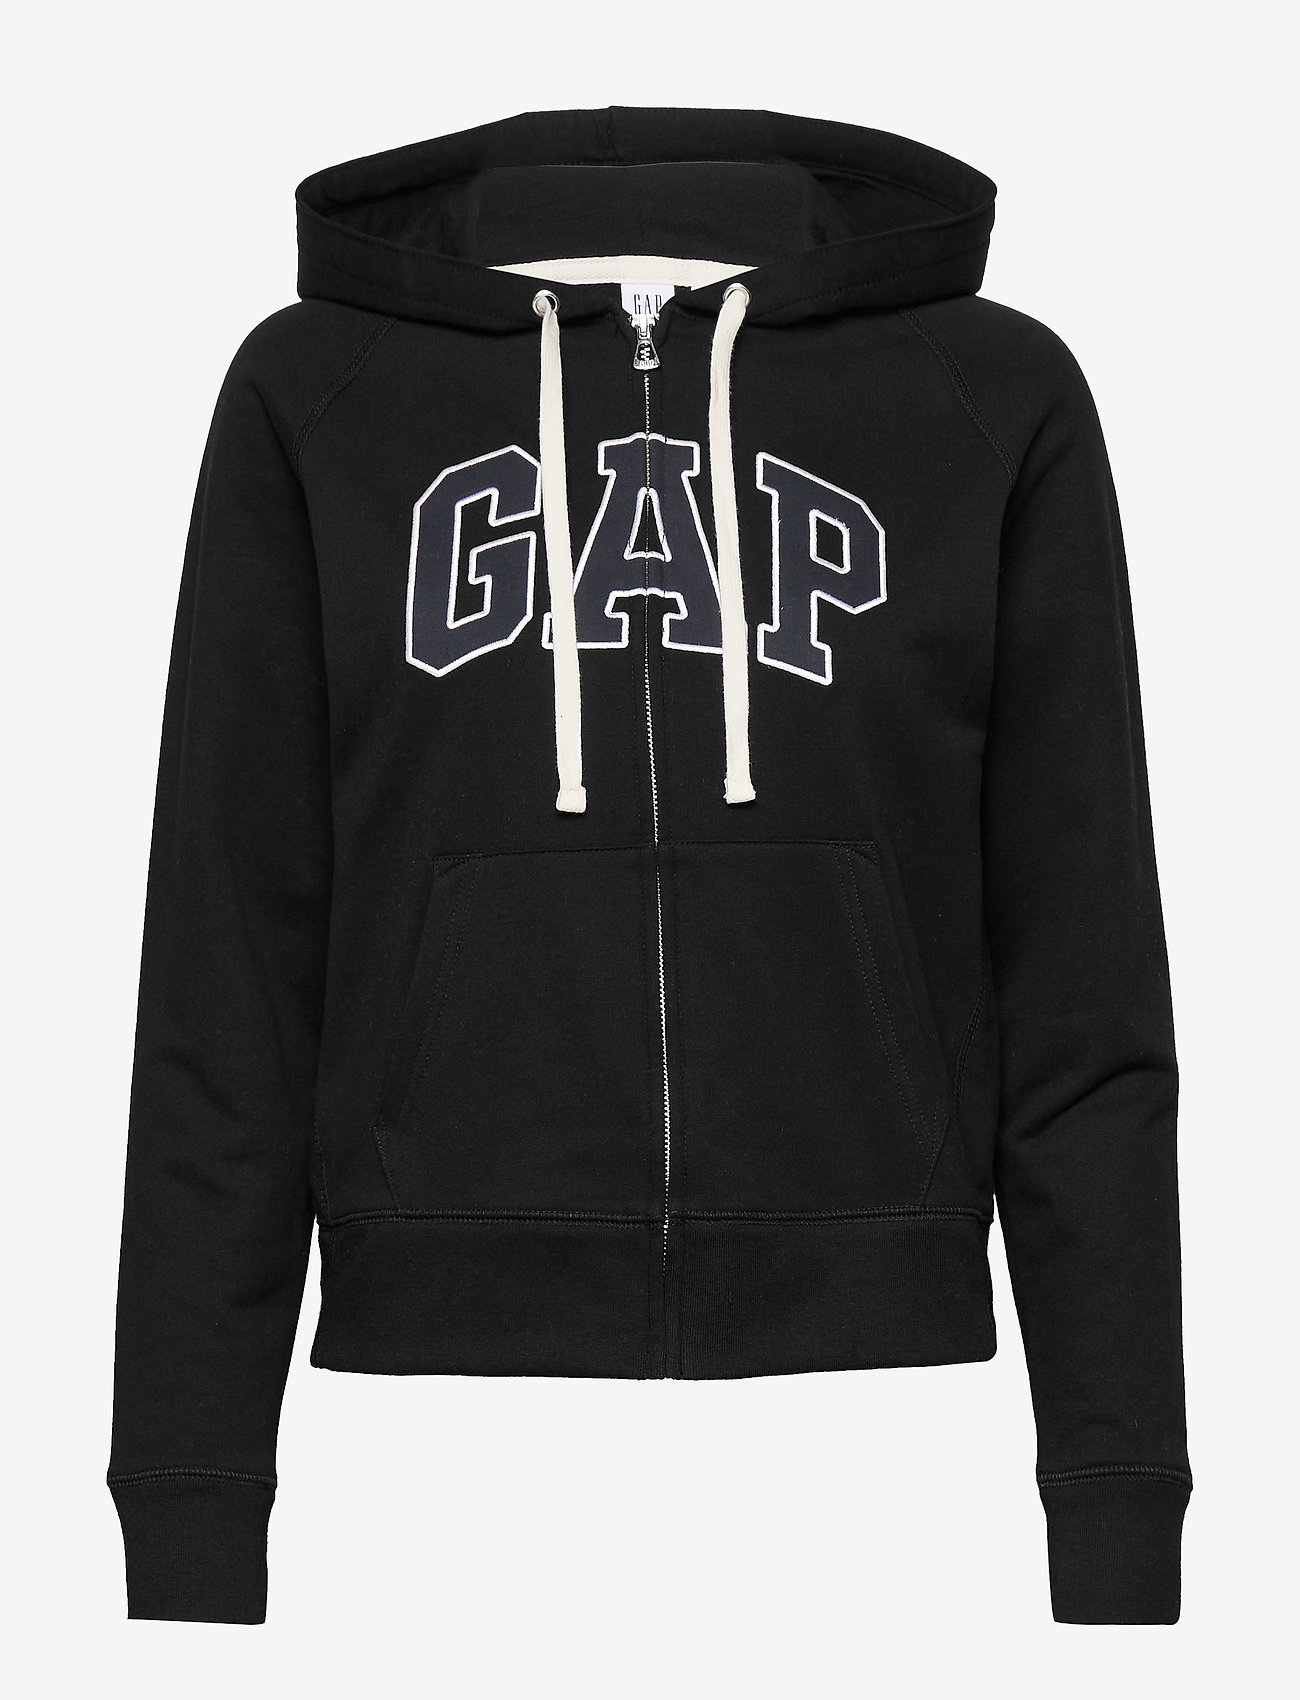 black and white gap hoodie